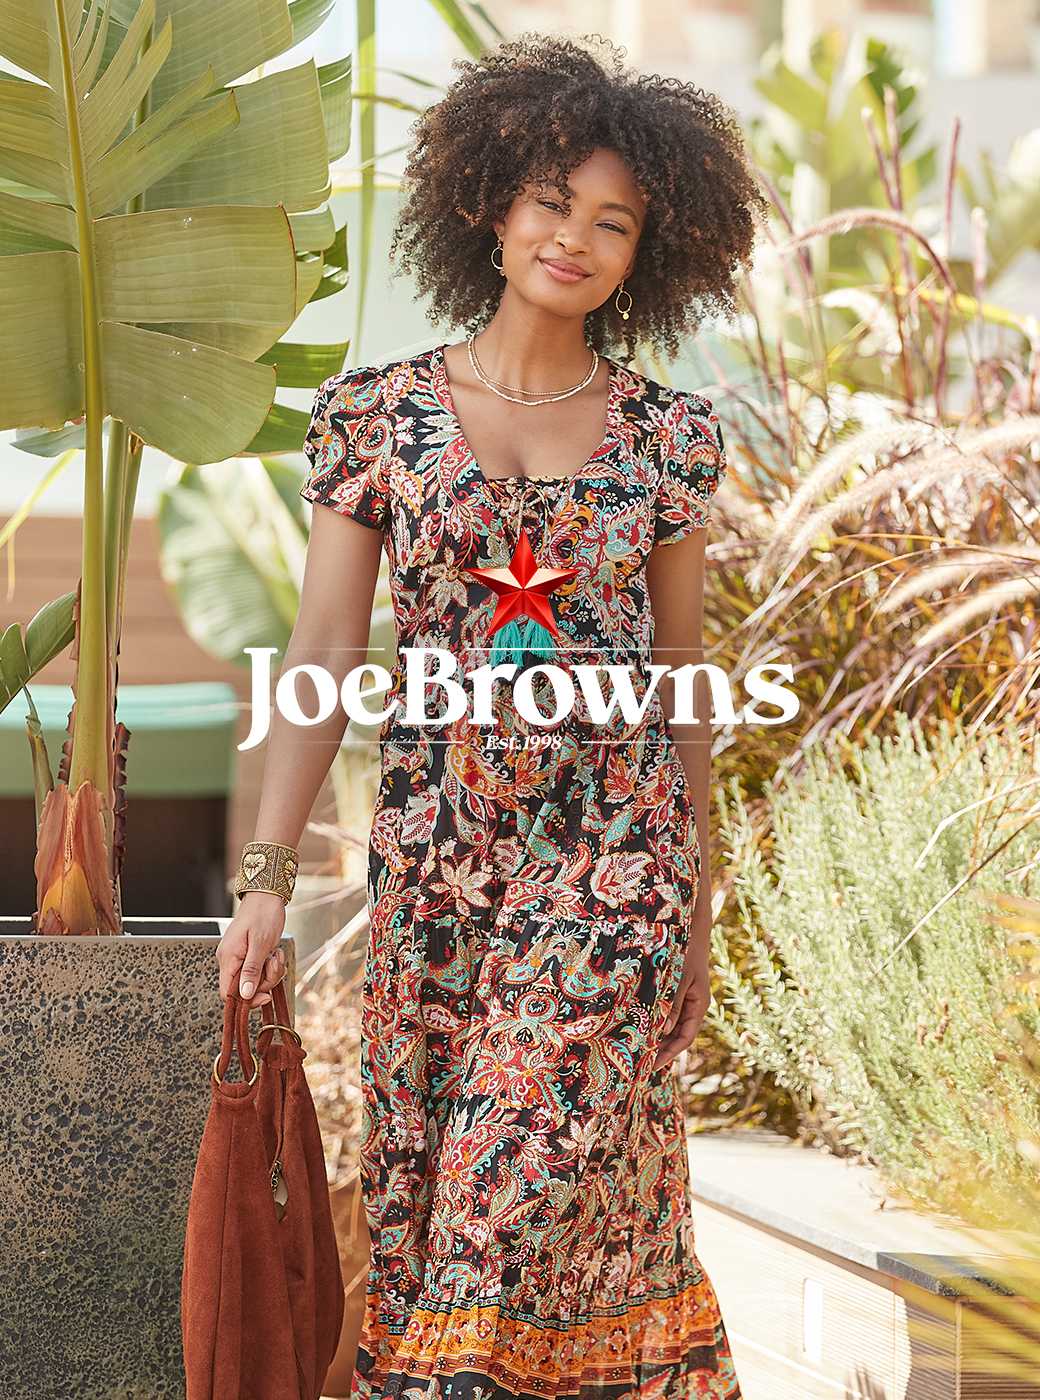 Joe browns. Shop now.